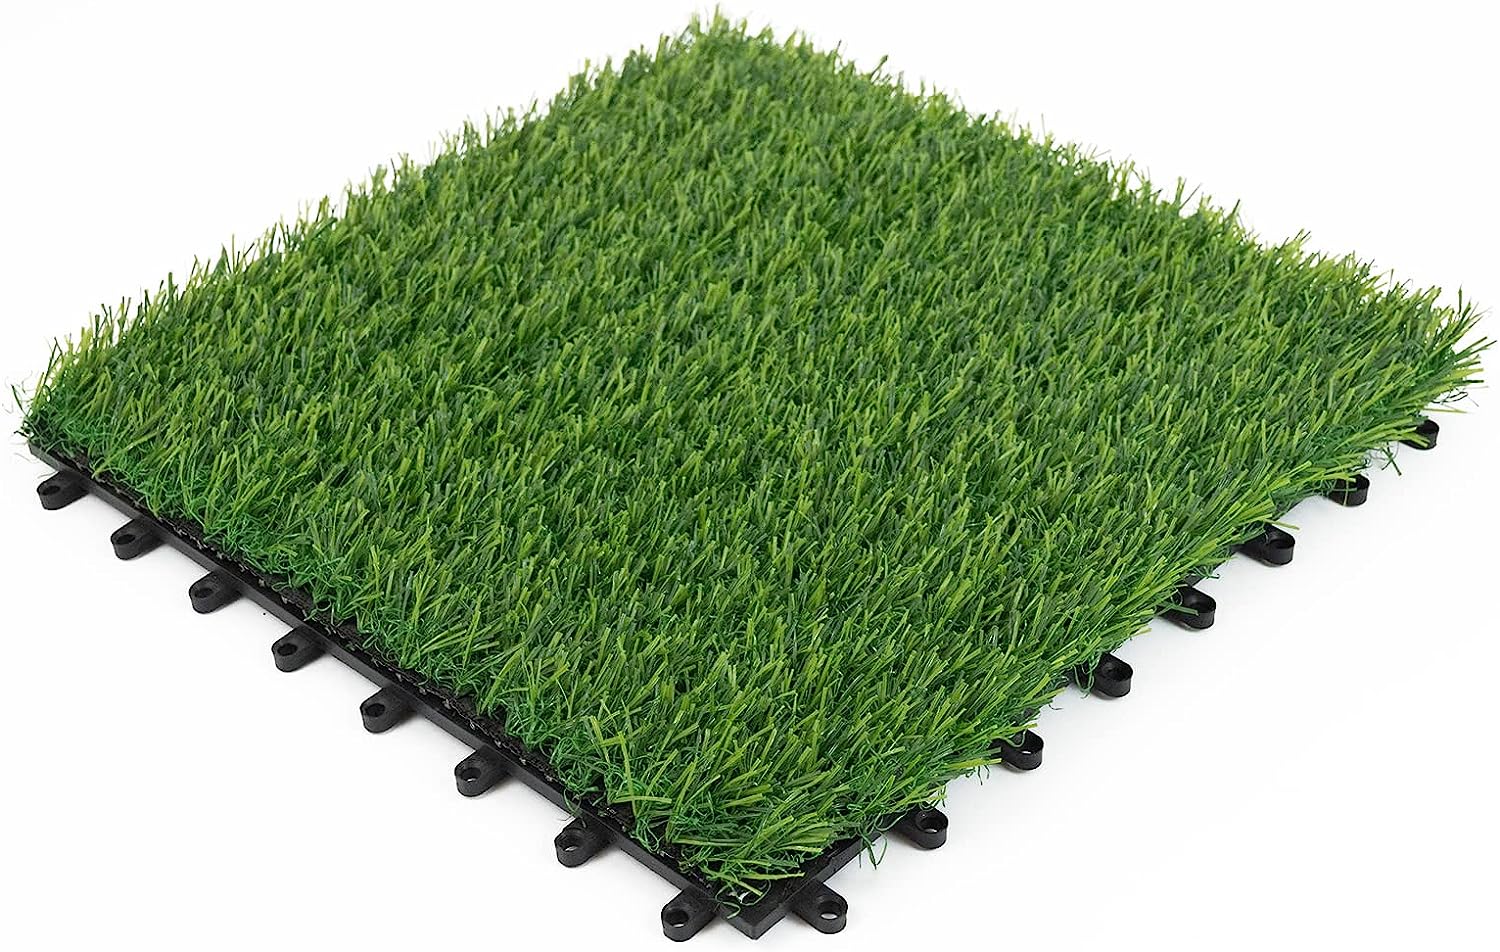 CG & KYGG Artificial Grass Soft Turf, 12